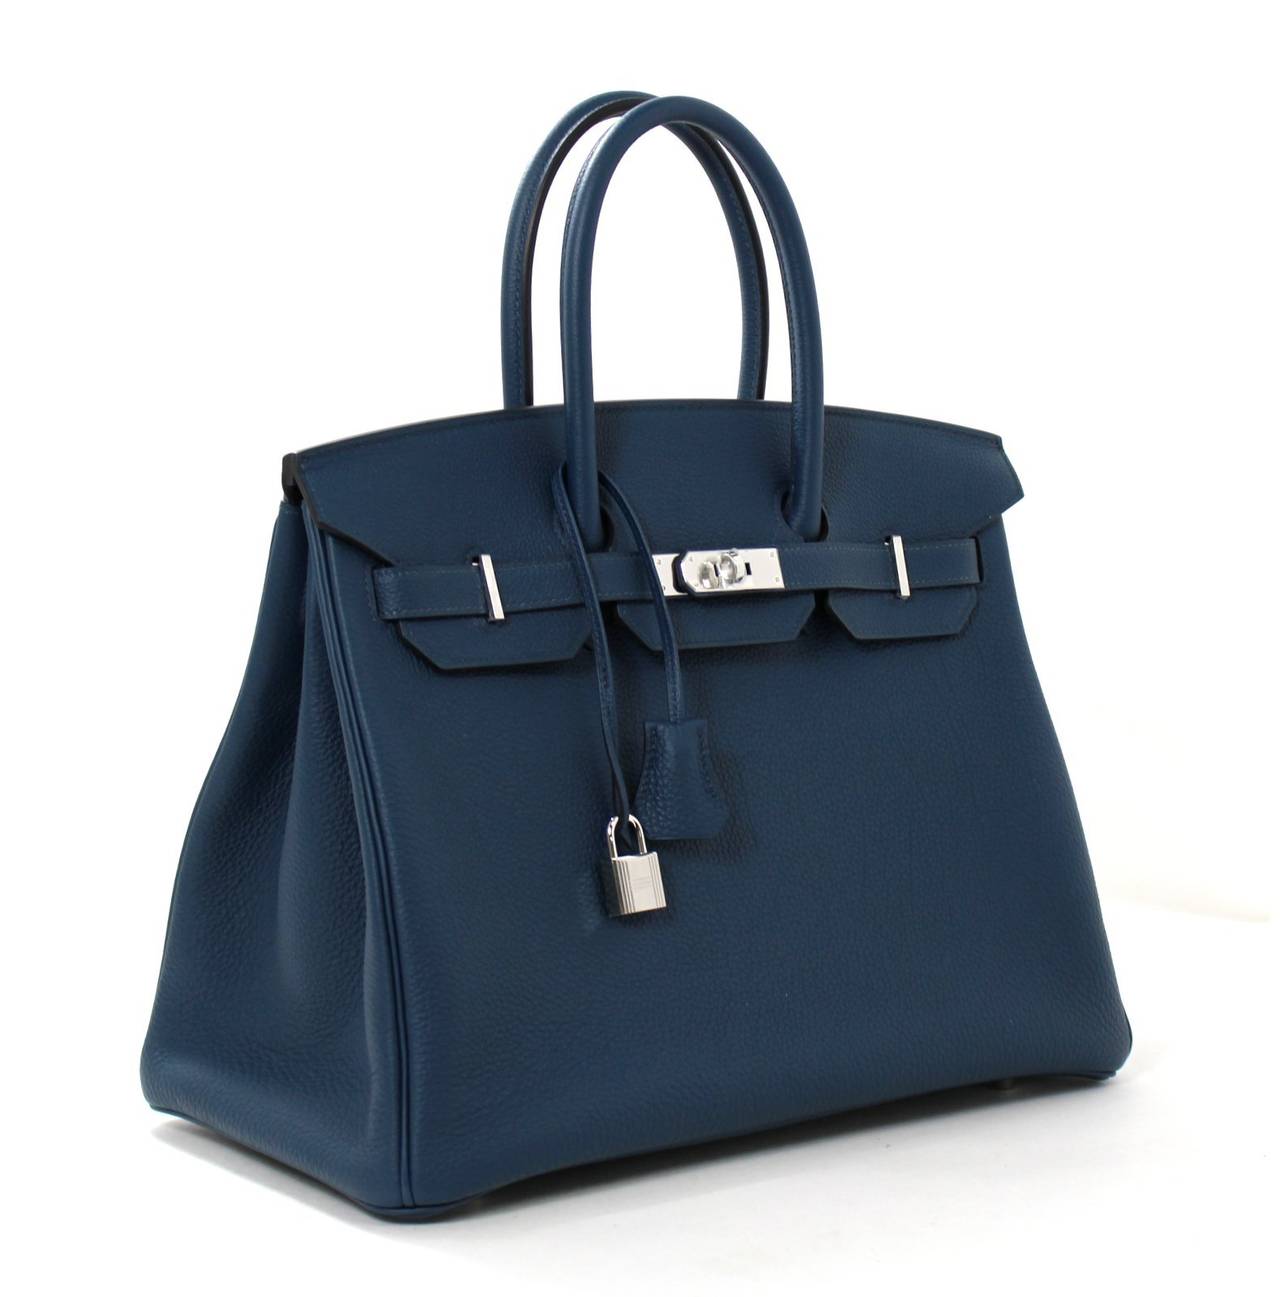 Hermes 35cm Blue de Prusse Buffalo Leather Birkin Bag with